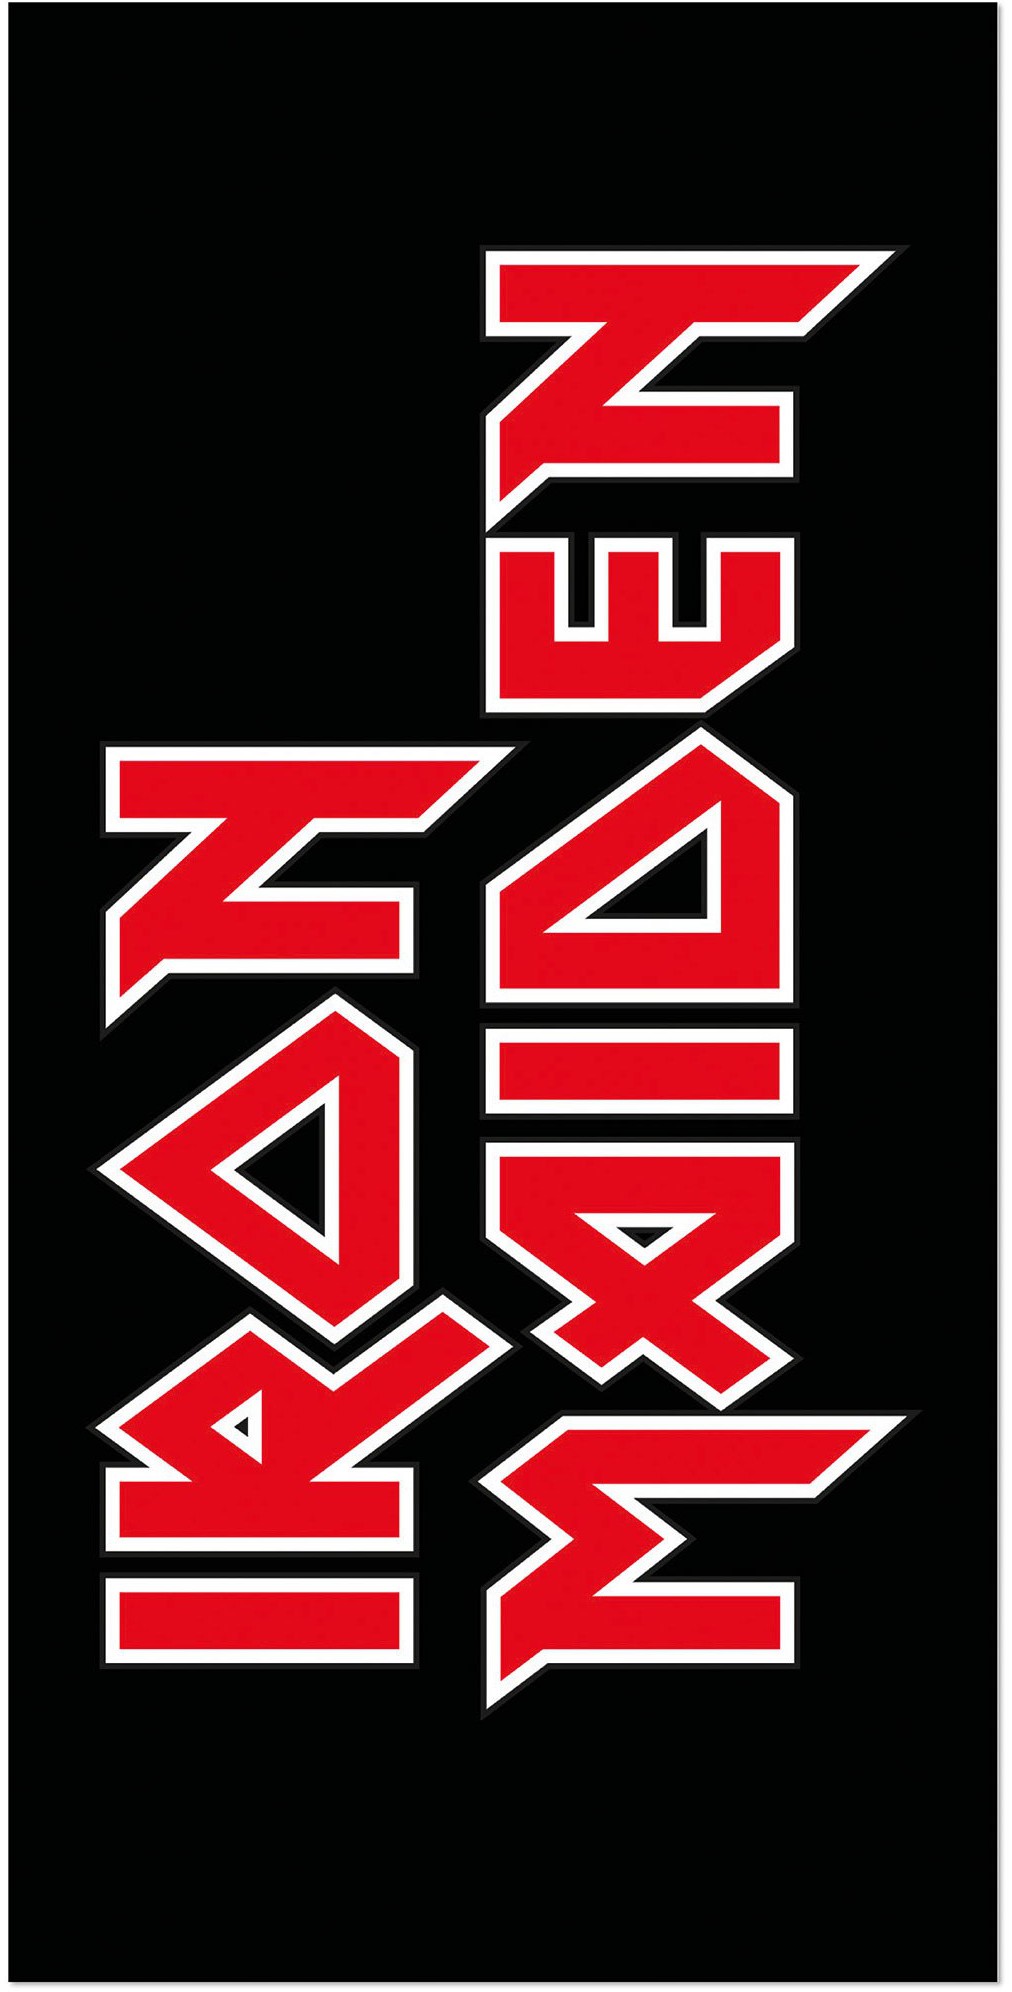 Iron Maiden - Logo Towel - 150 x 75 cm